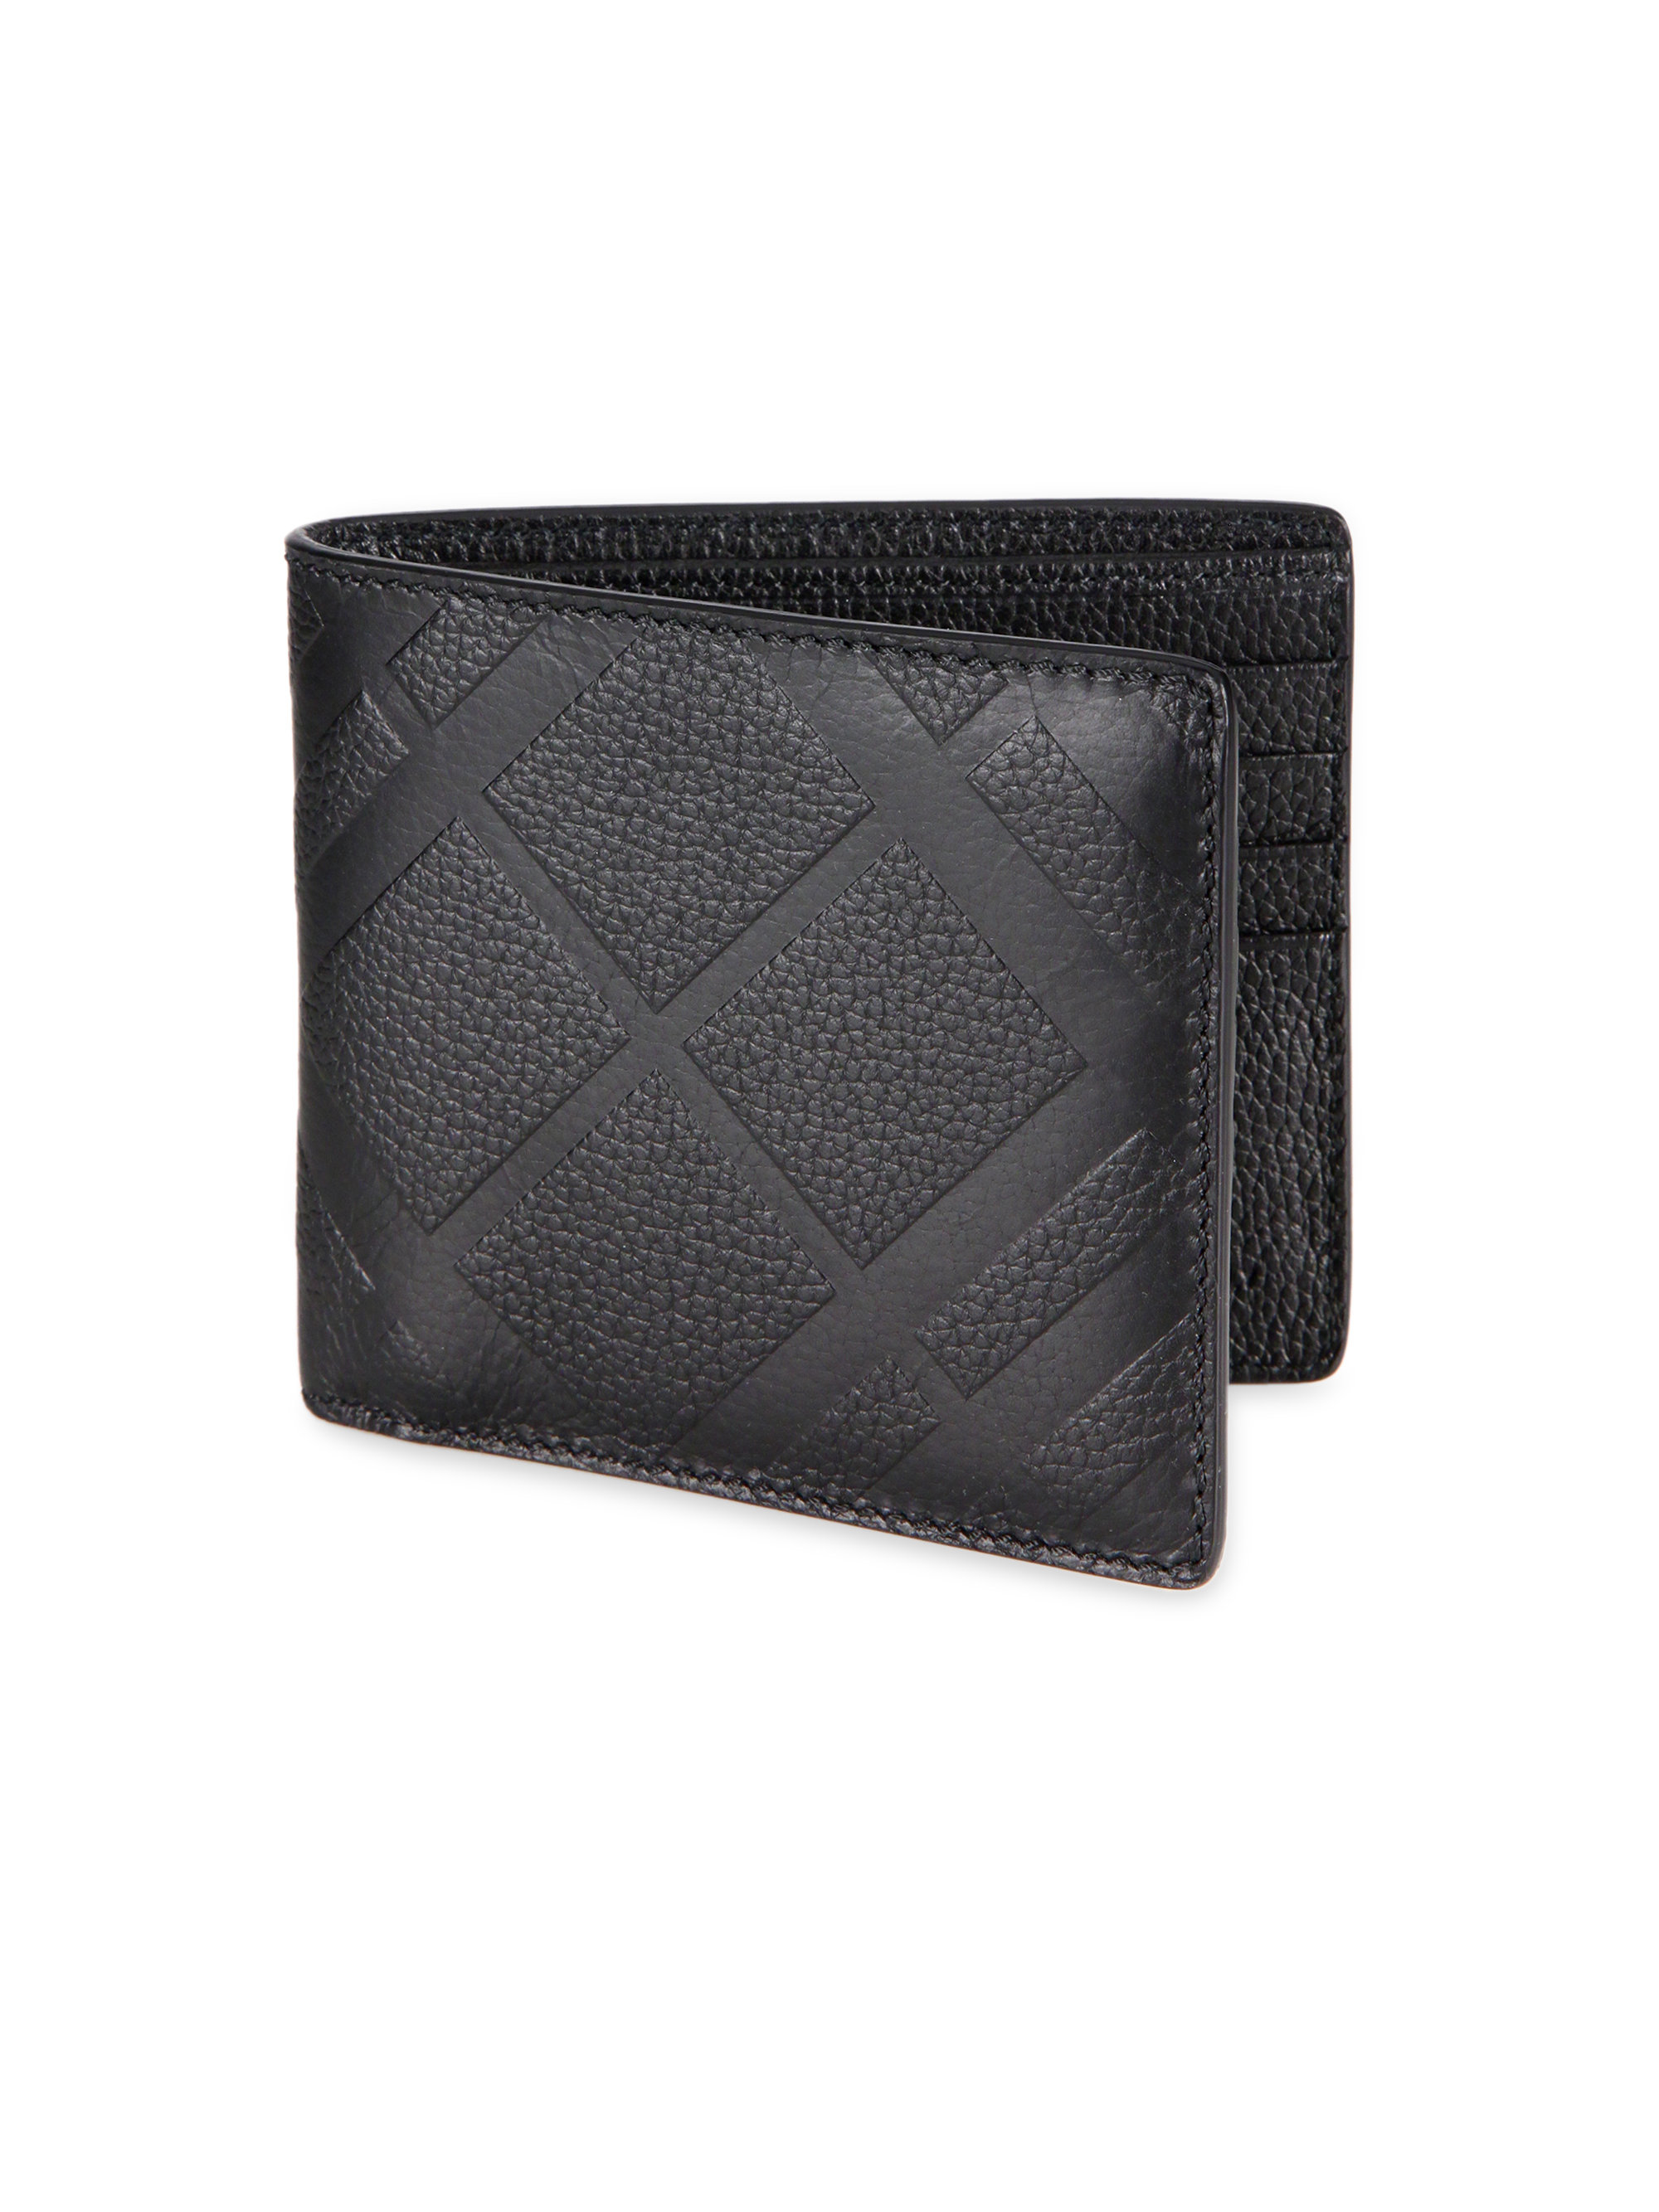 Burberry London Pebbled Leather Billfold Wallet in Black for Men | Lyst